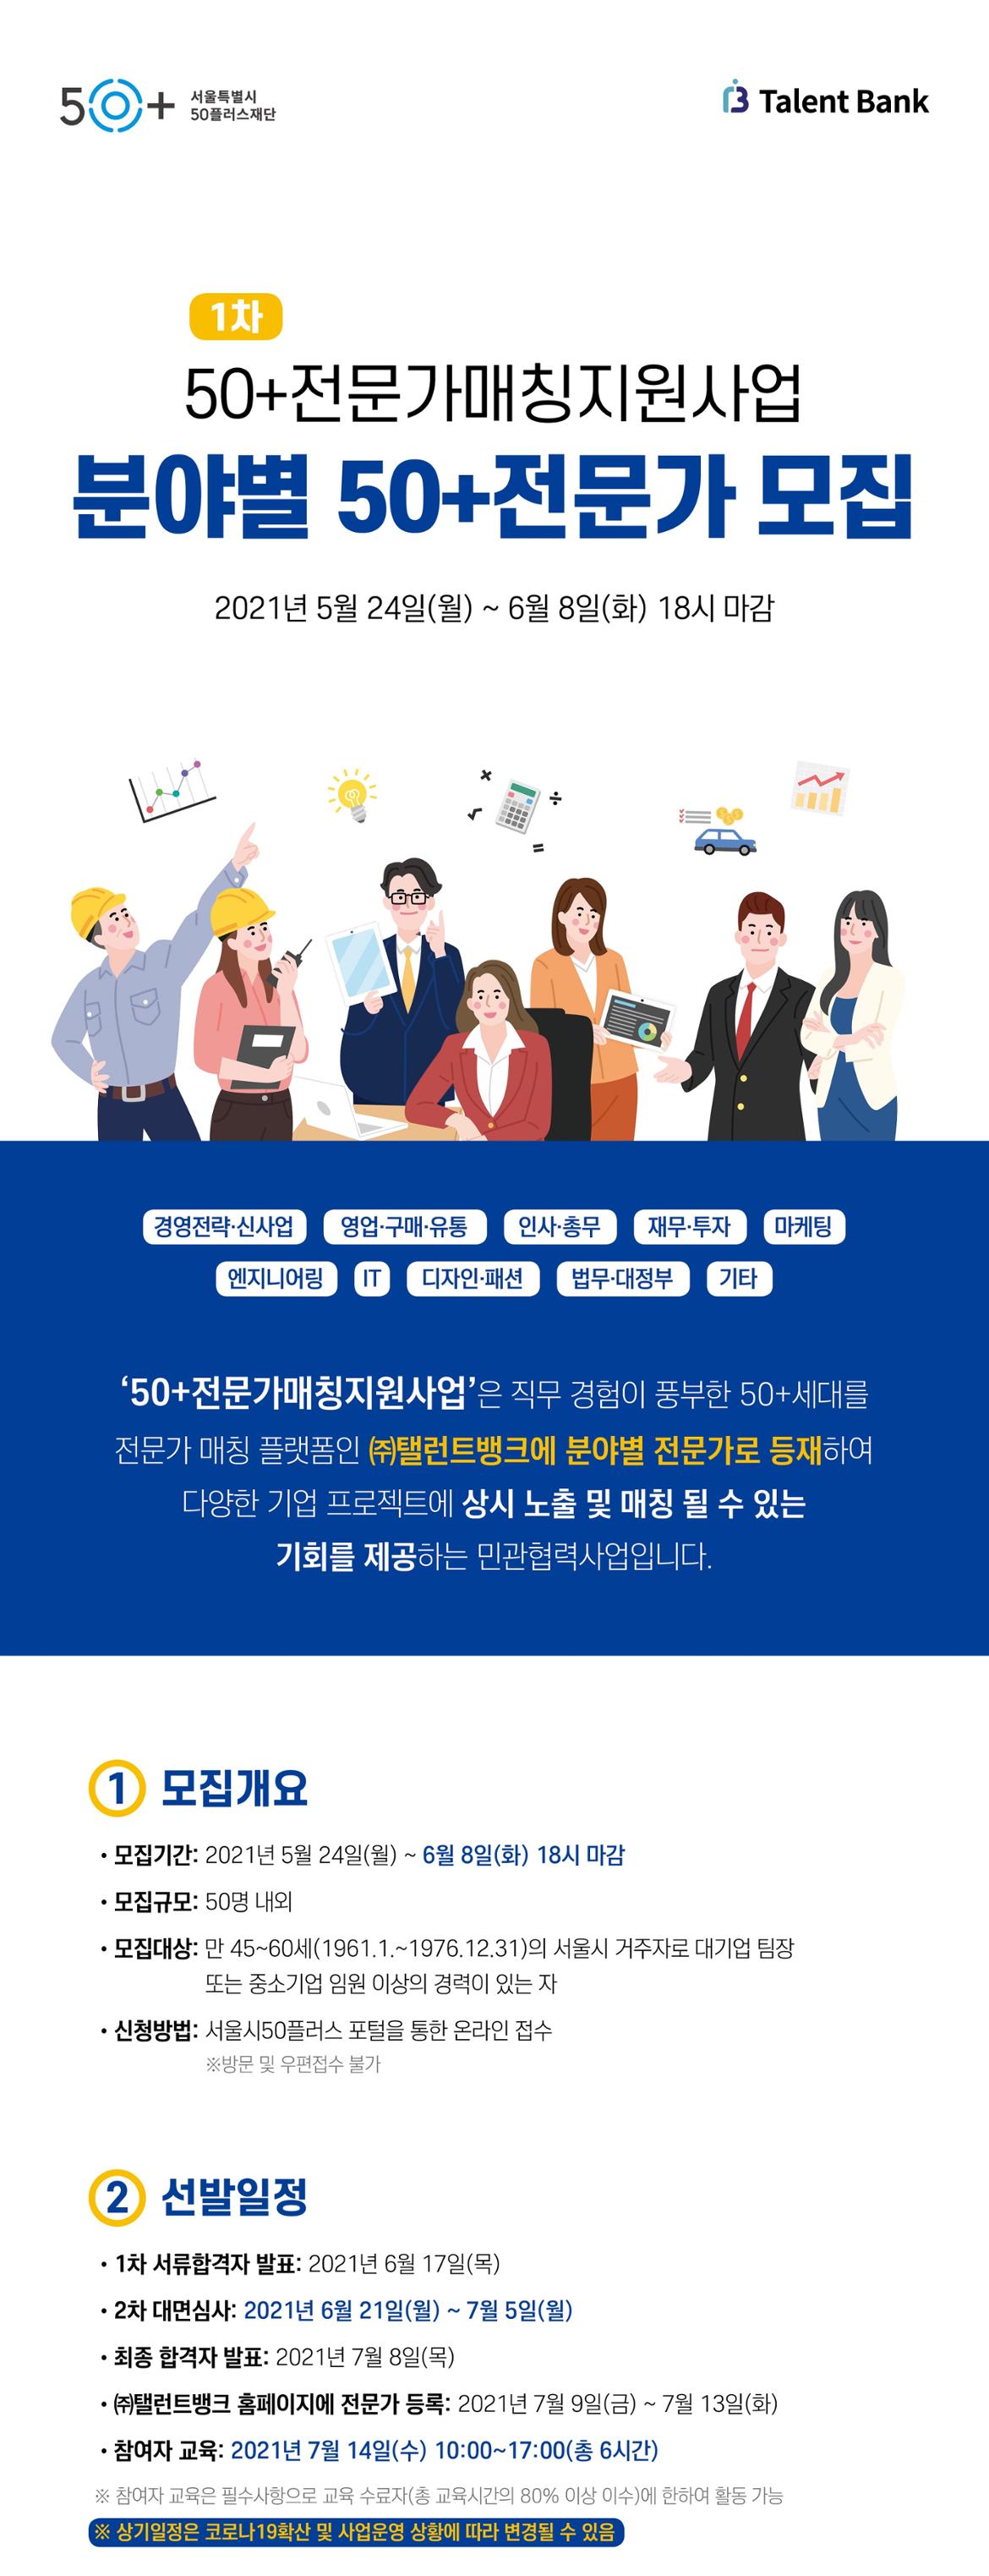 50%2B전문가매칭지원사업+1차모집-웹배너_최종_1.jpg